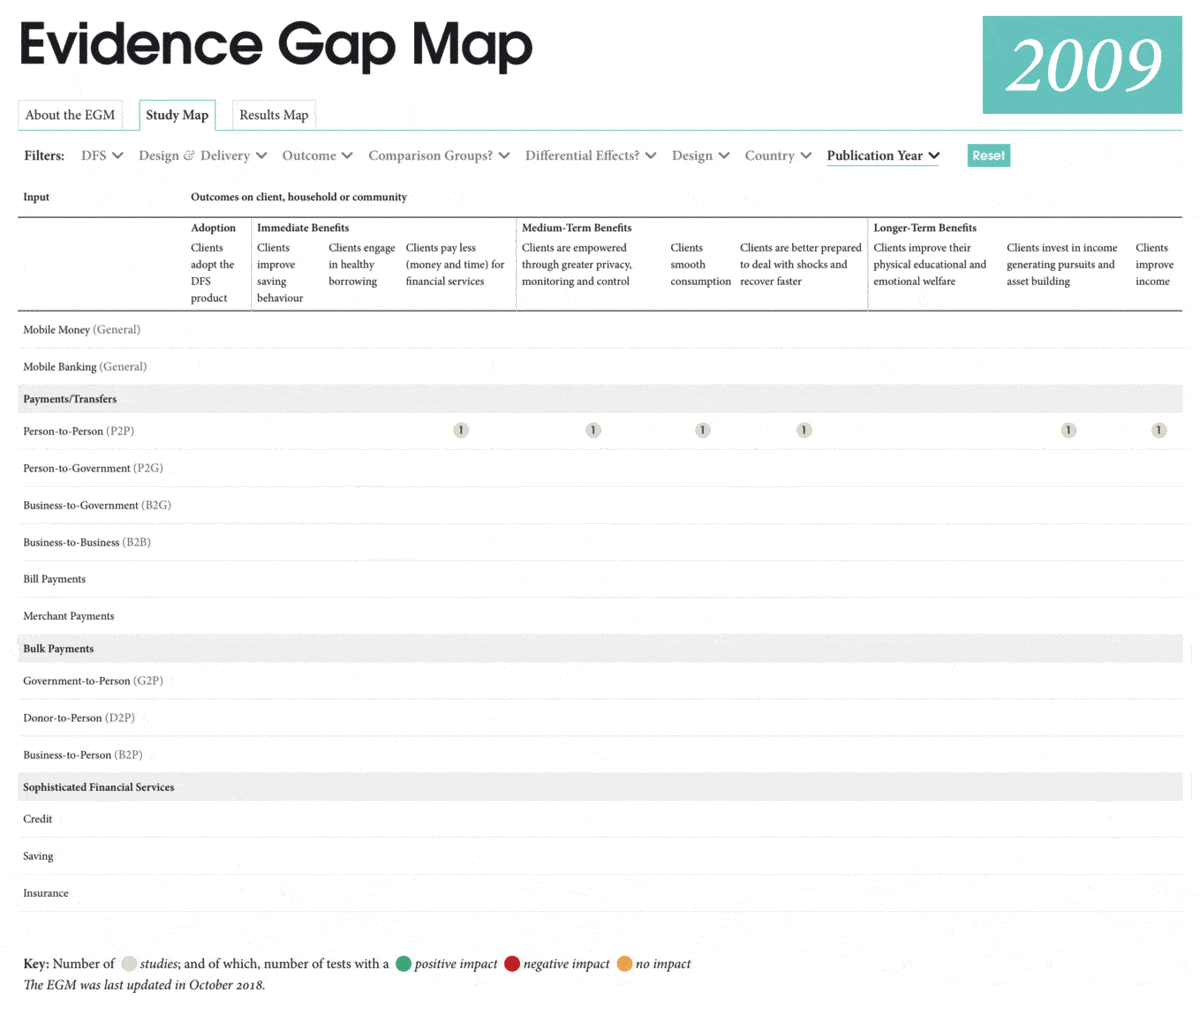 Launching the Digital Finance Evidence Gap Map 2.0